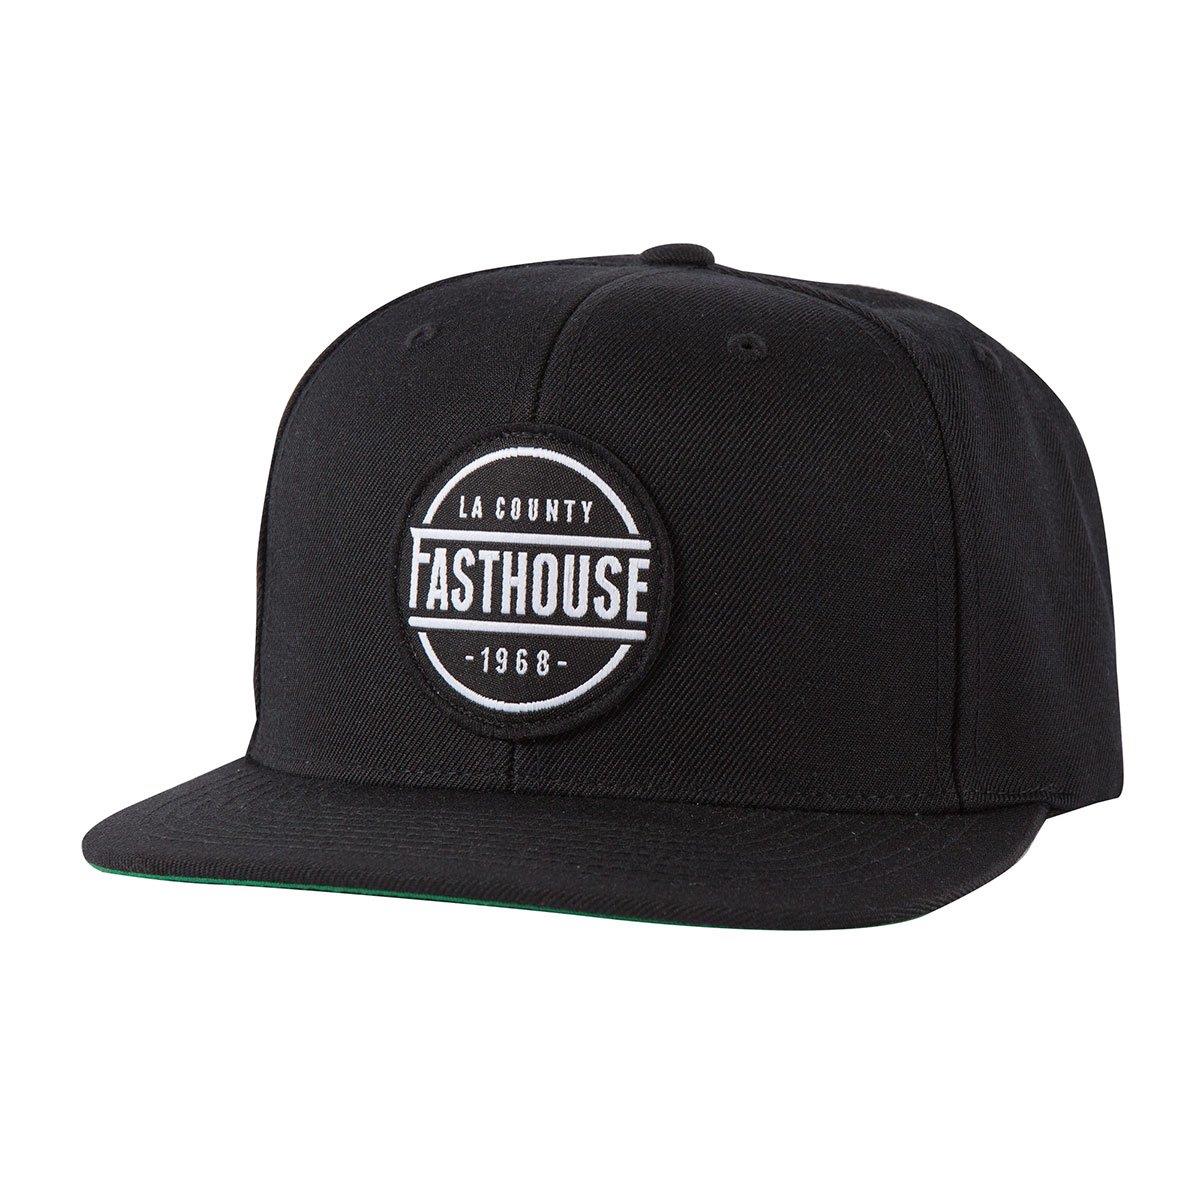 Fasthouse Casquette Snap Back LA County Black